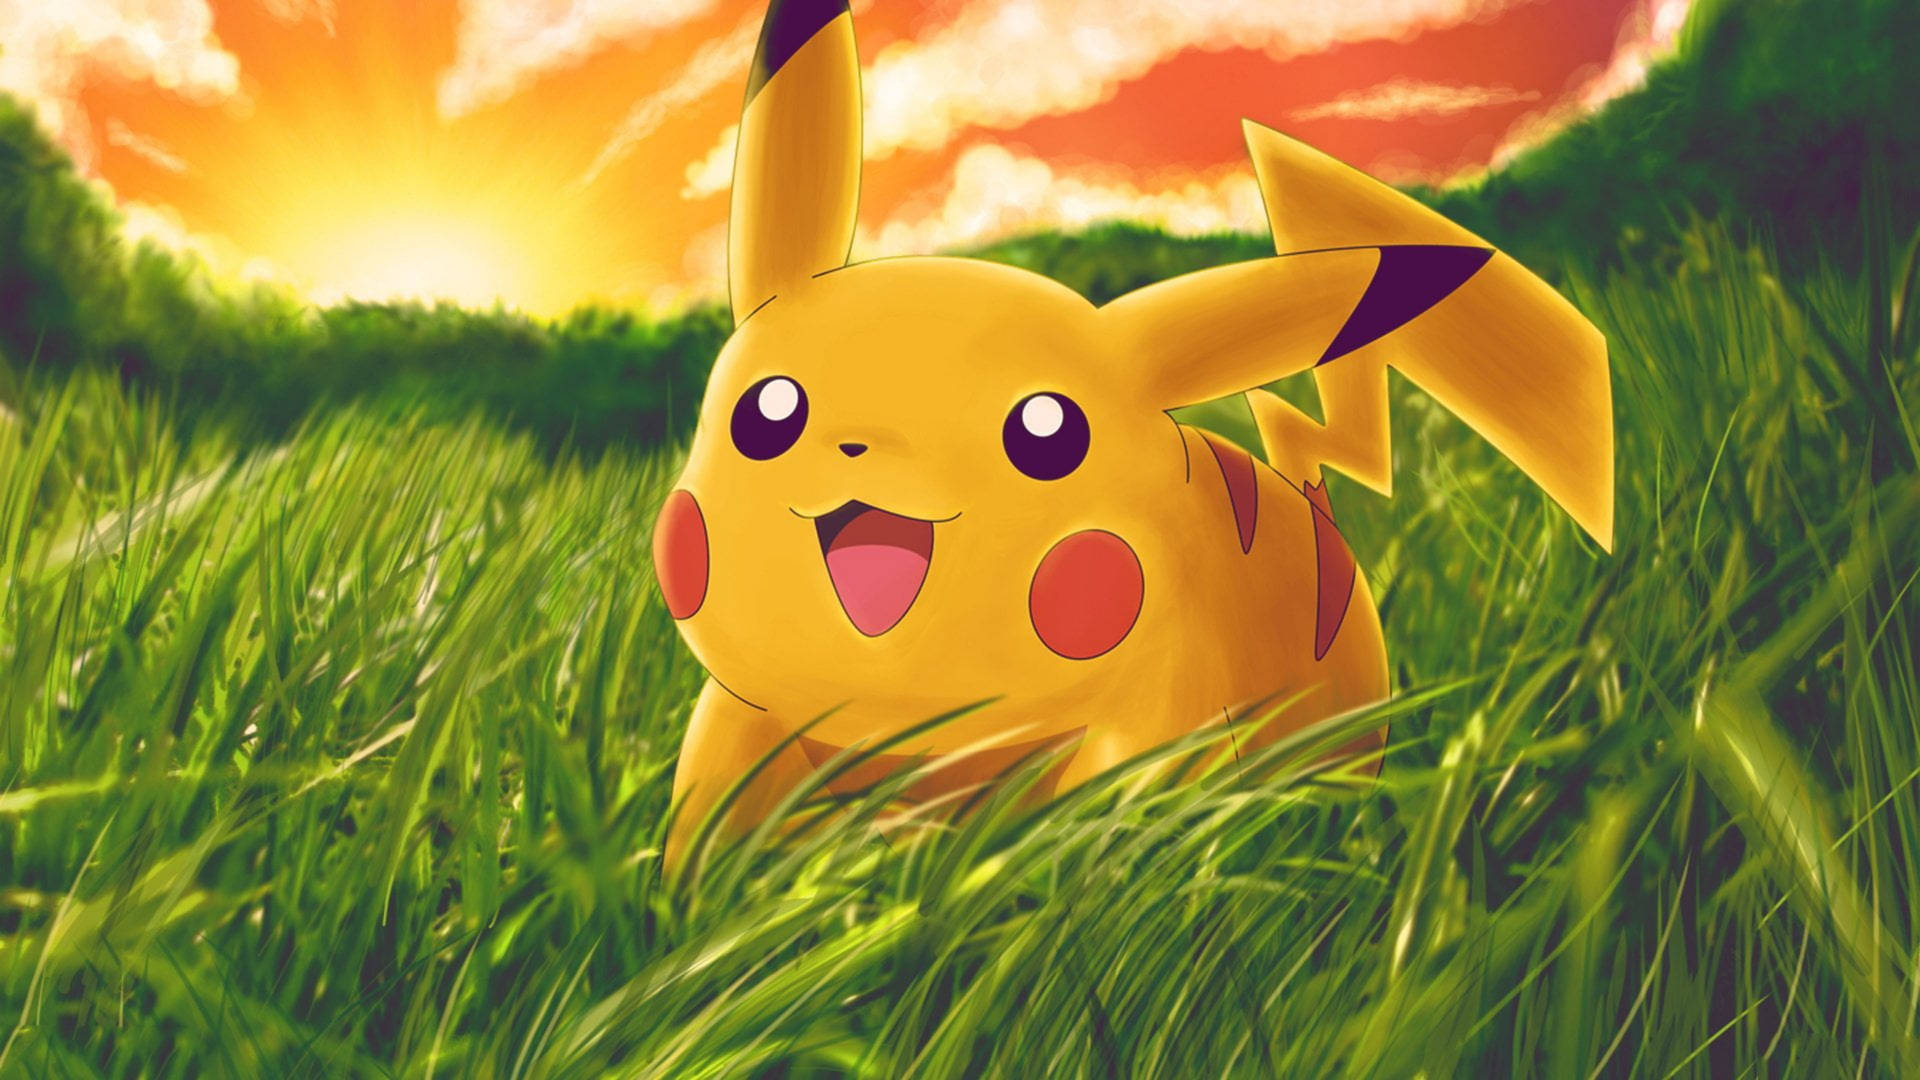 Cute Smile Pikachu From Pikachu Wallpaper